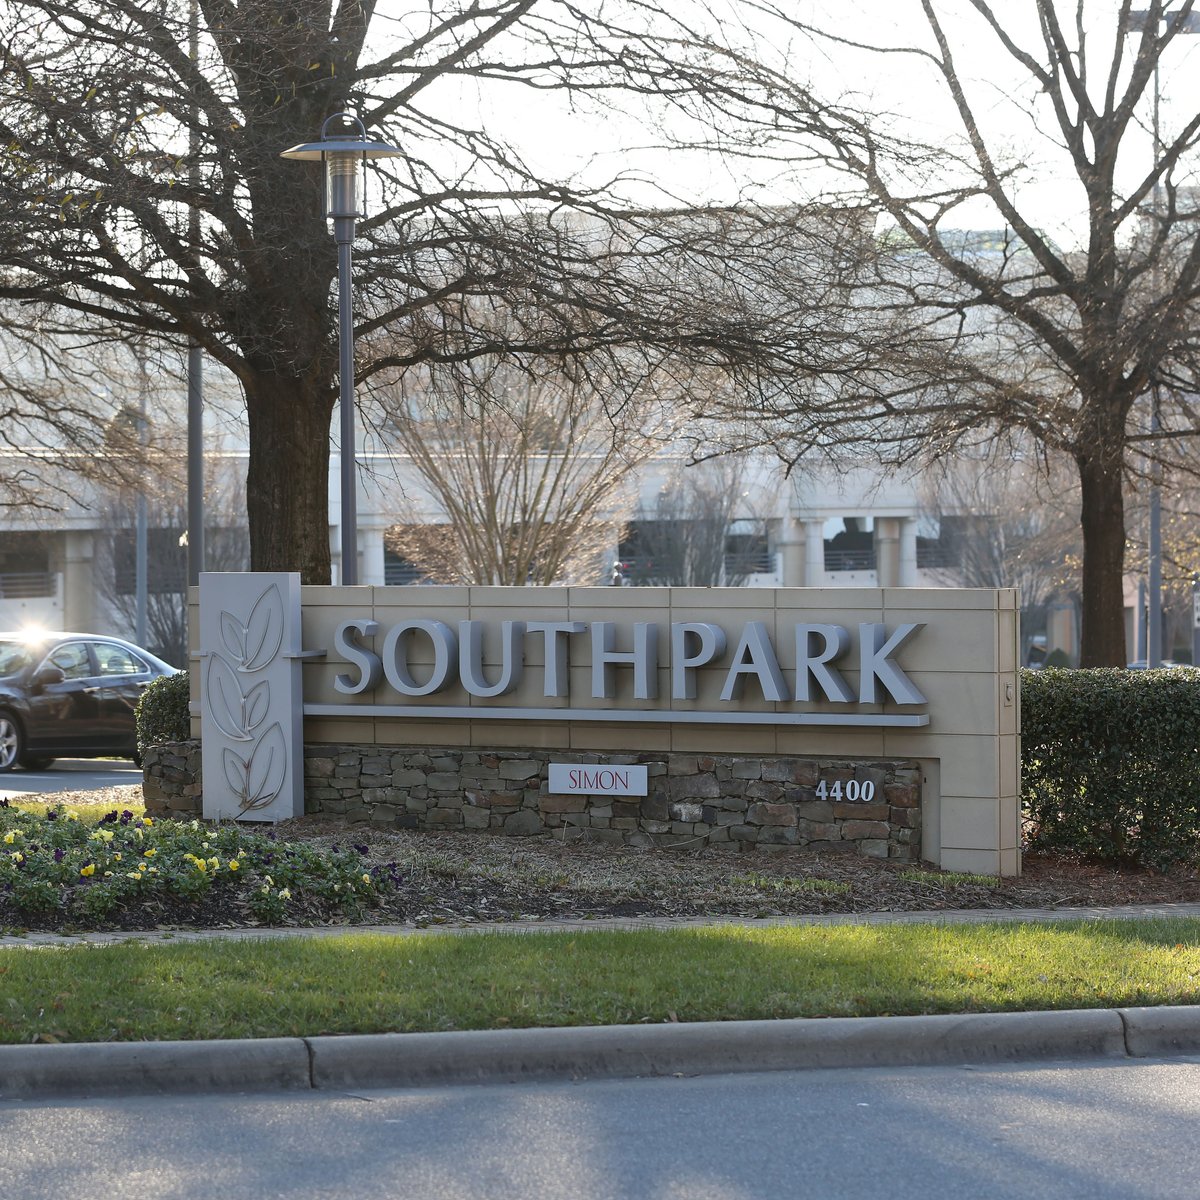 SouthPark, Charlotte, NC —Advisory Services Panel